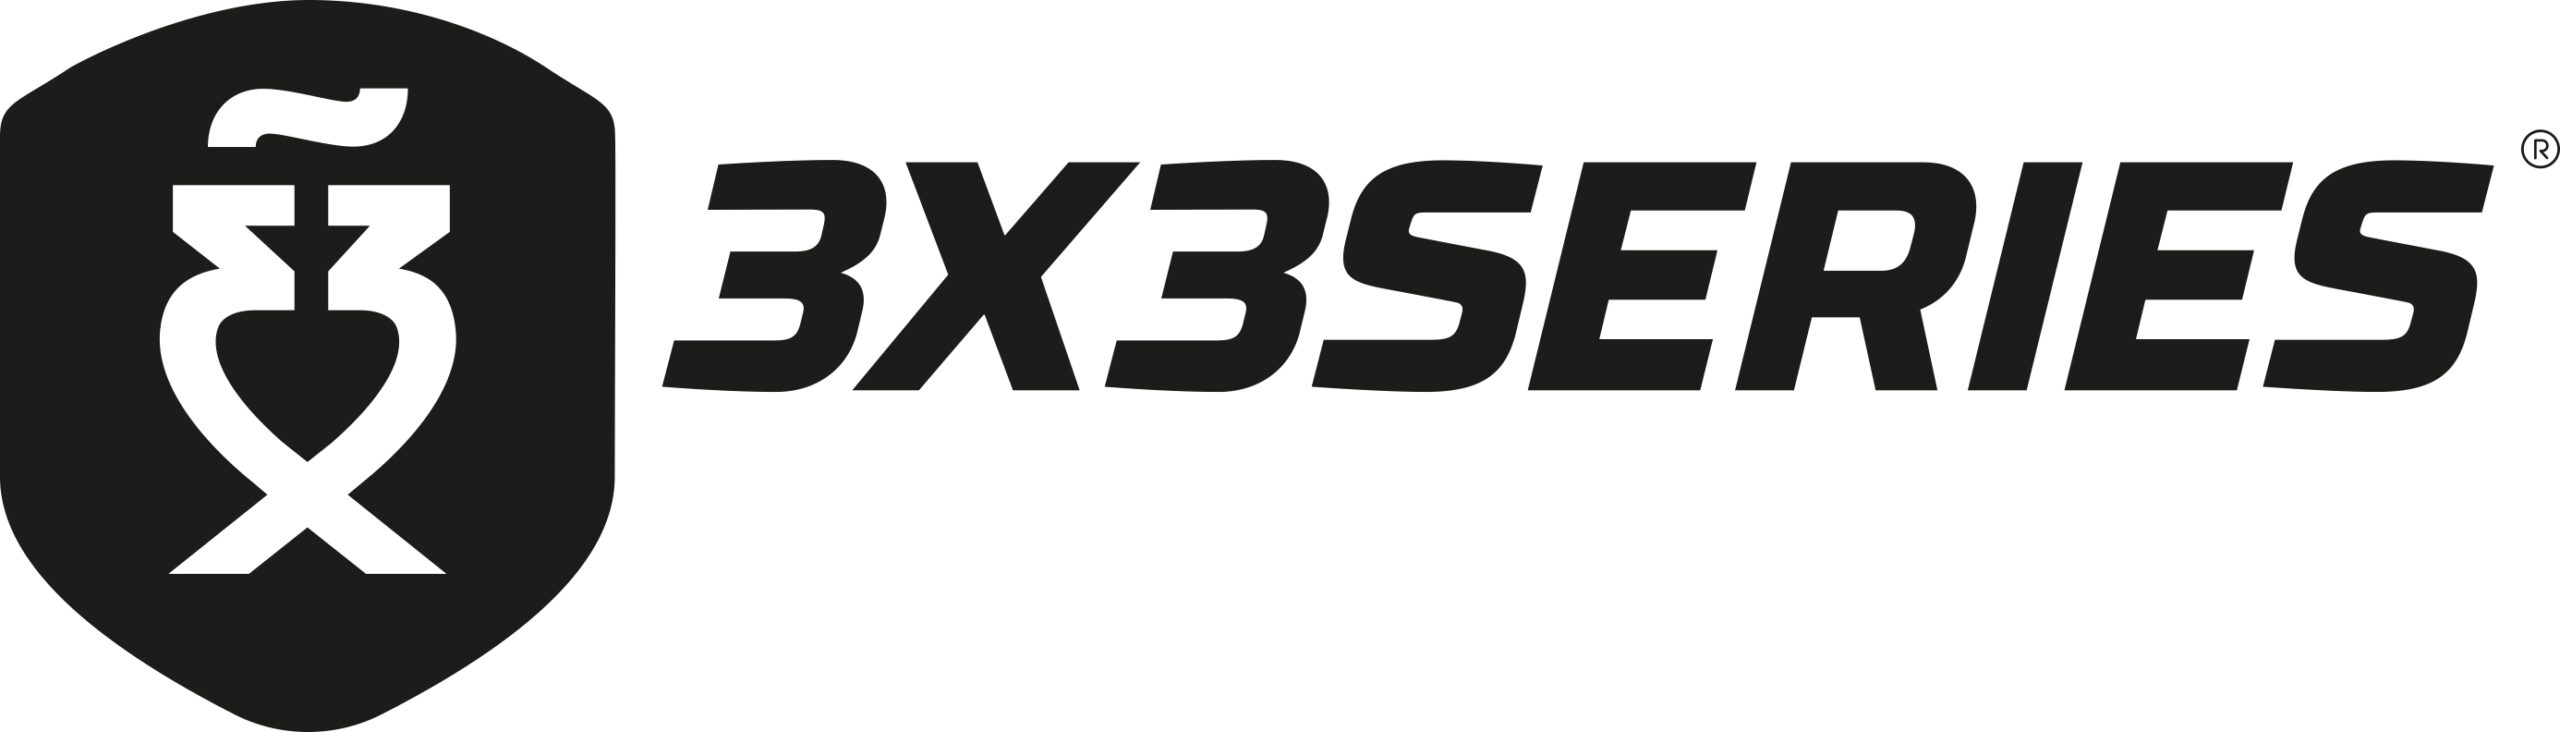 Logo 3x3 series negro